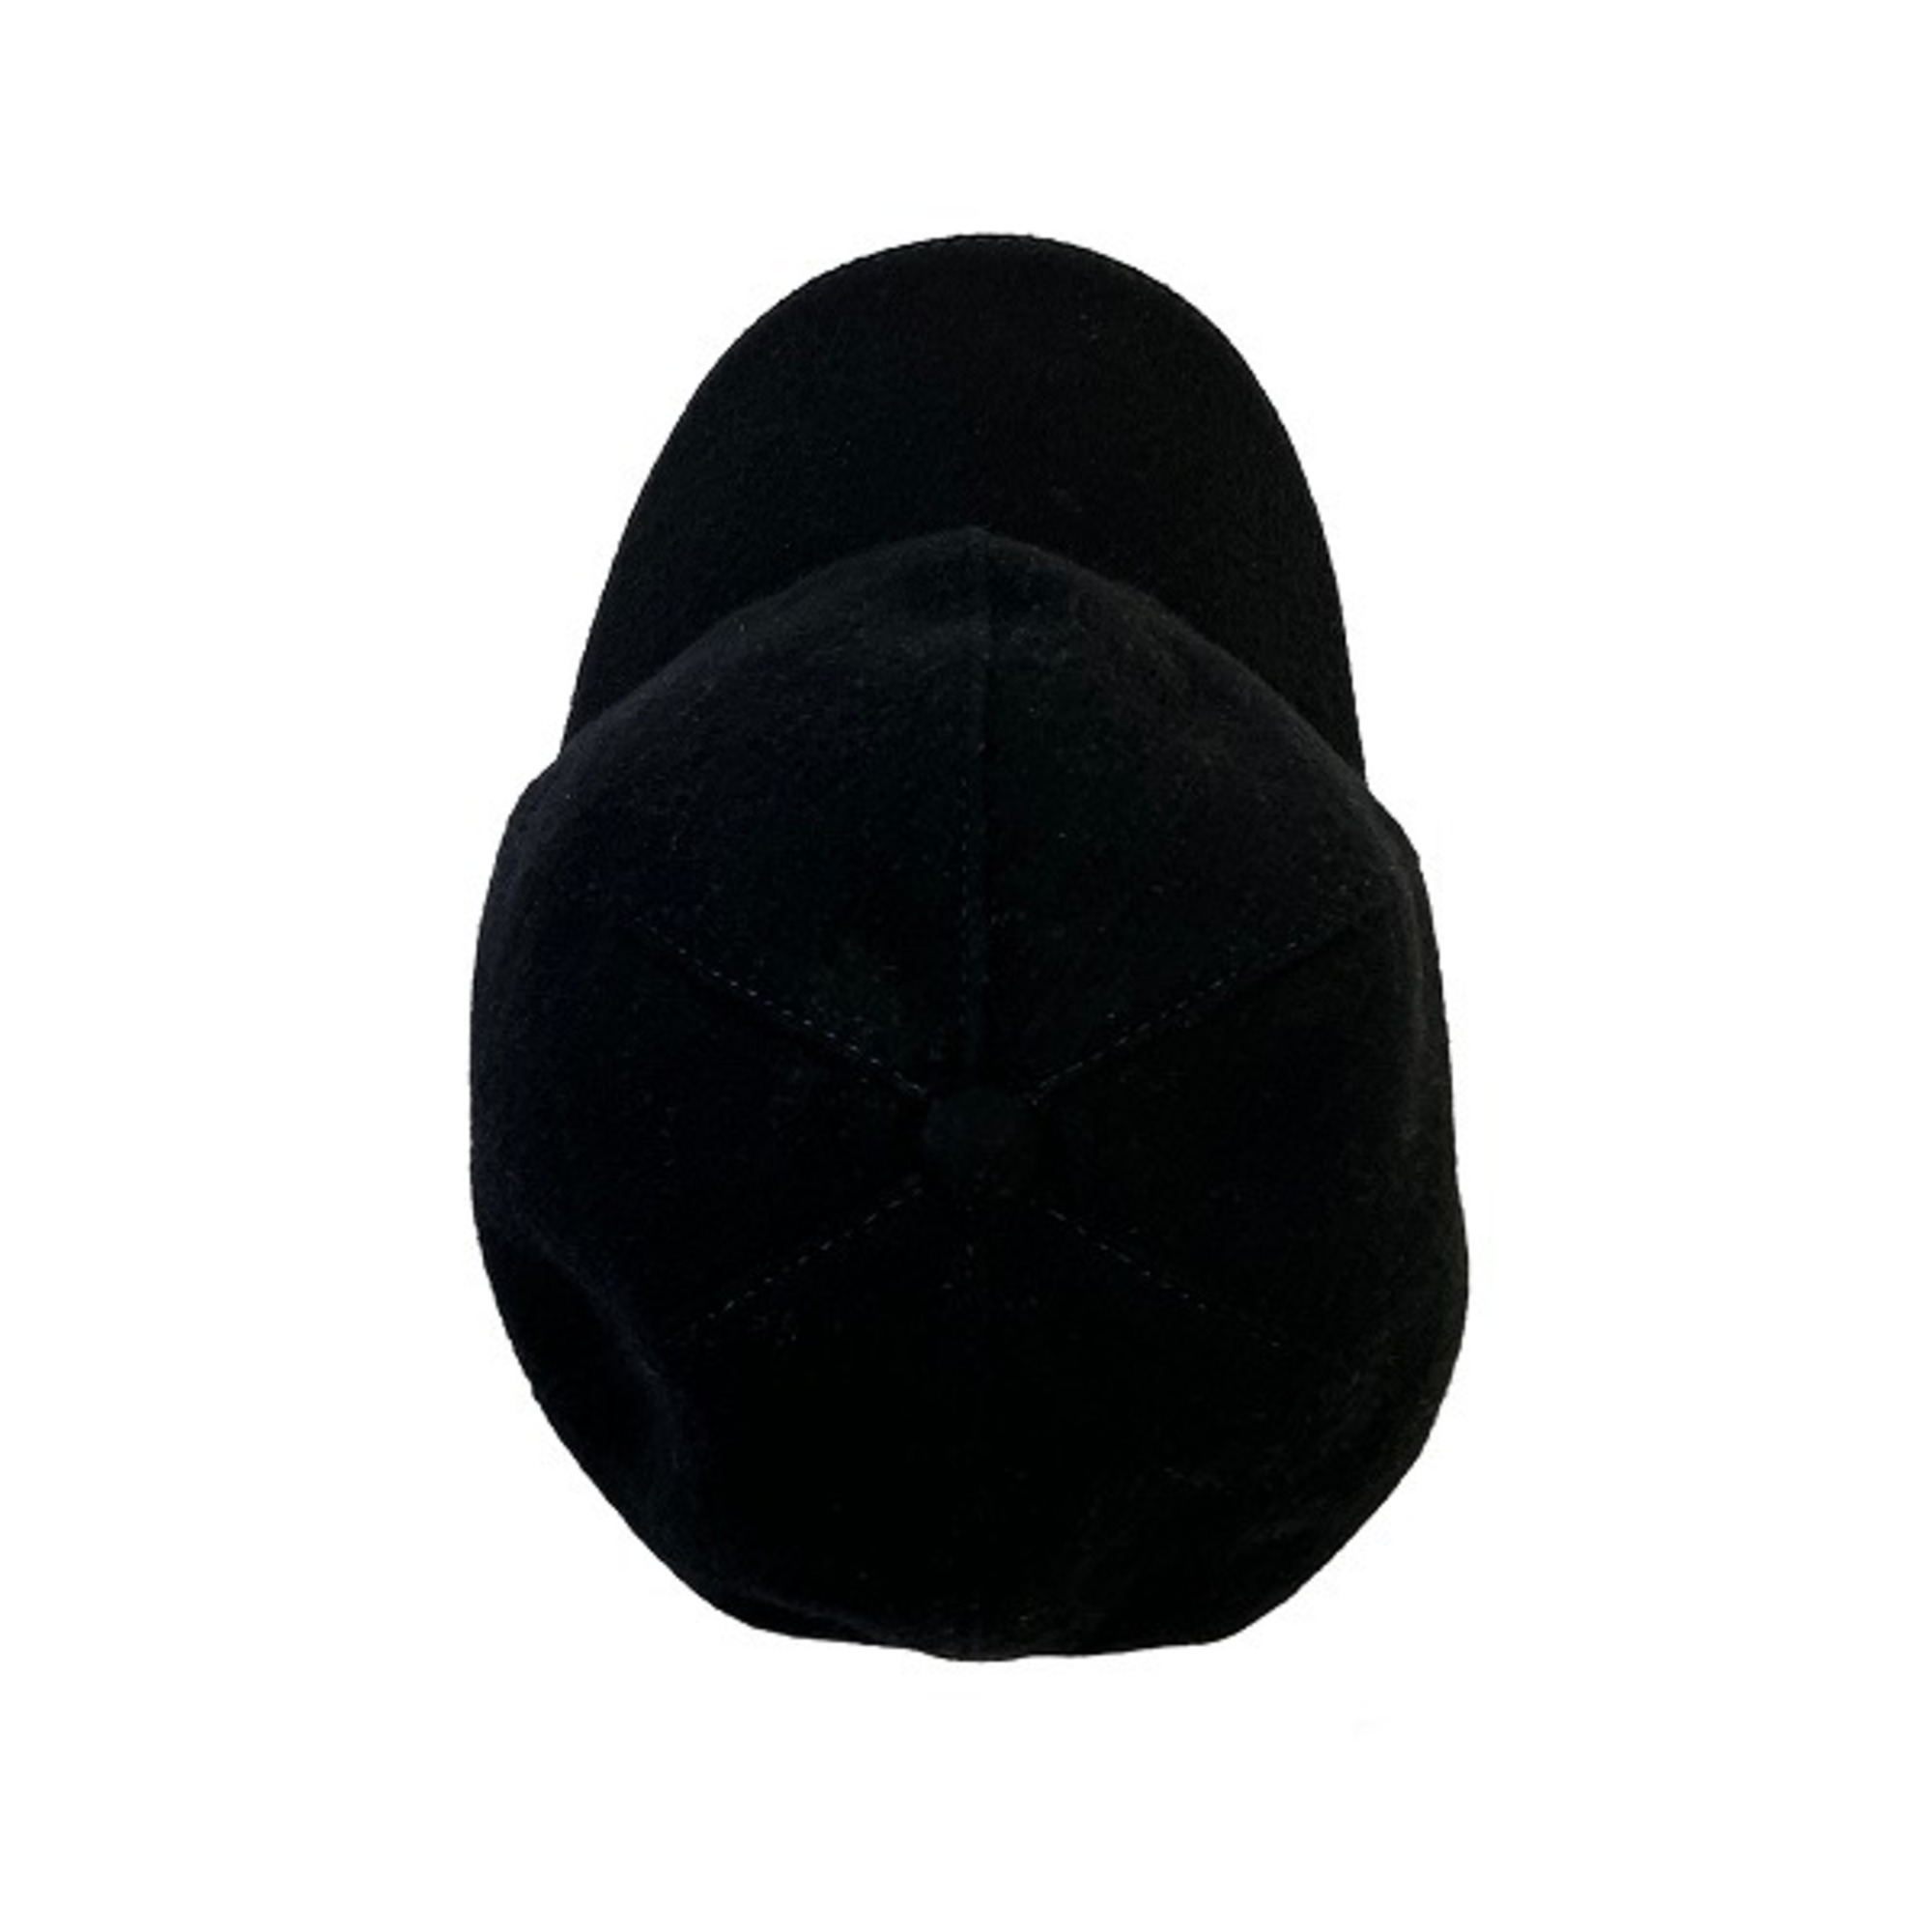 GUCCI Black M/58 Size Wool Apparel Baseball Cap Unisex Accessories